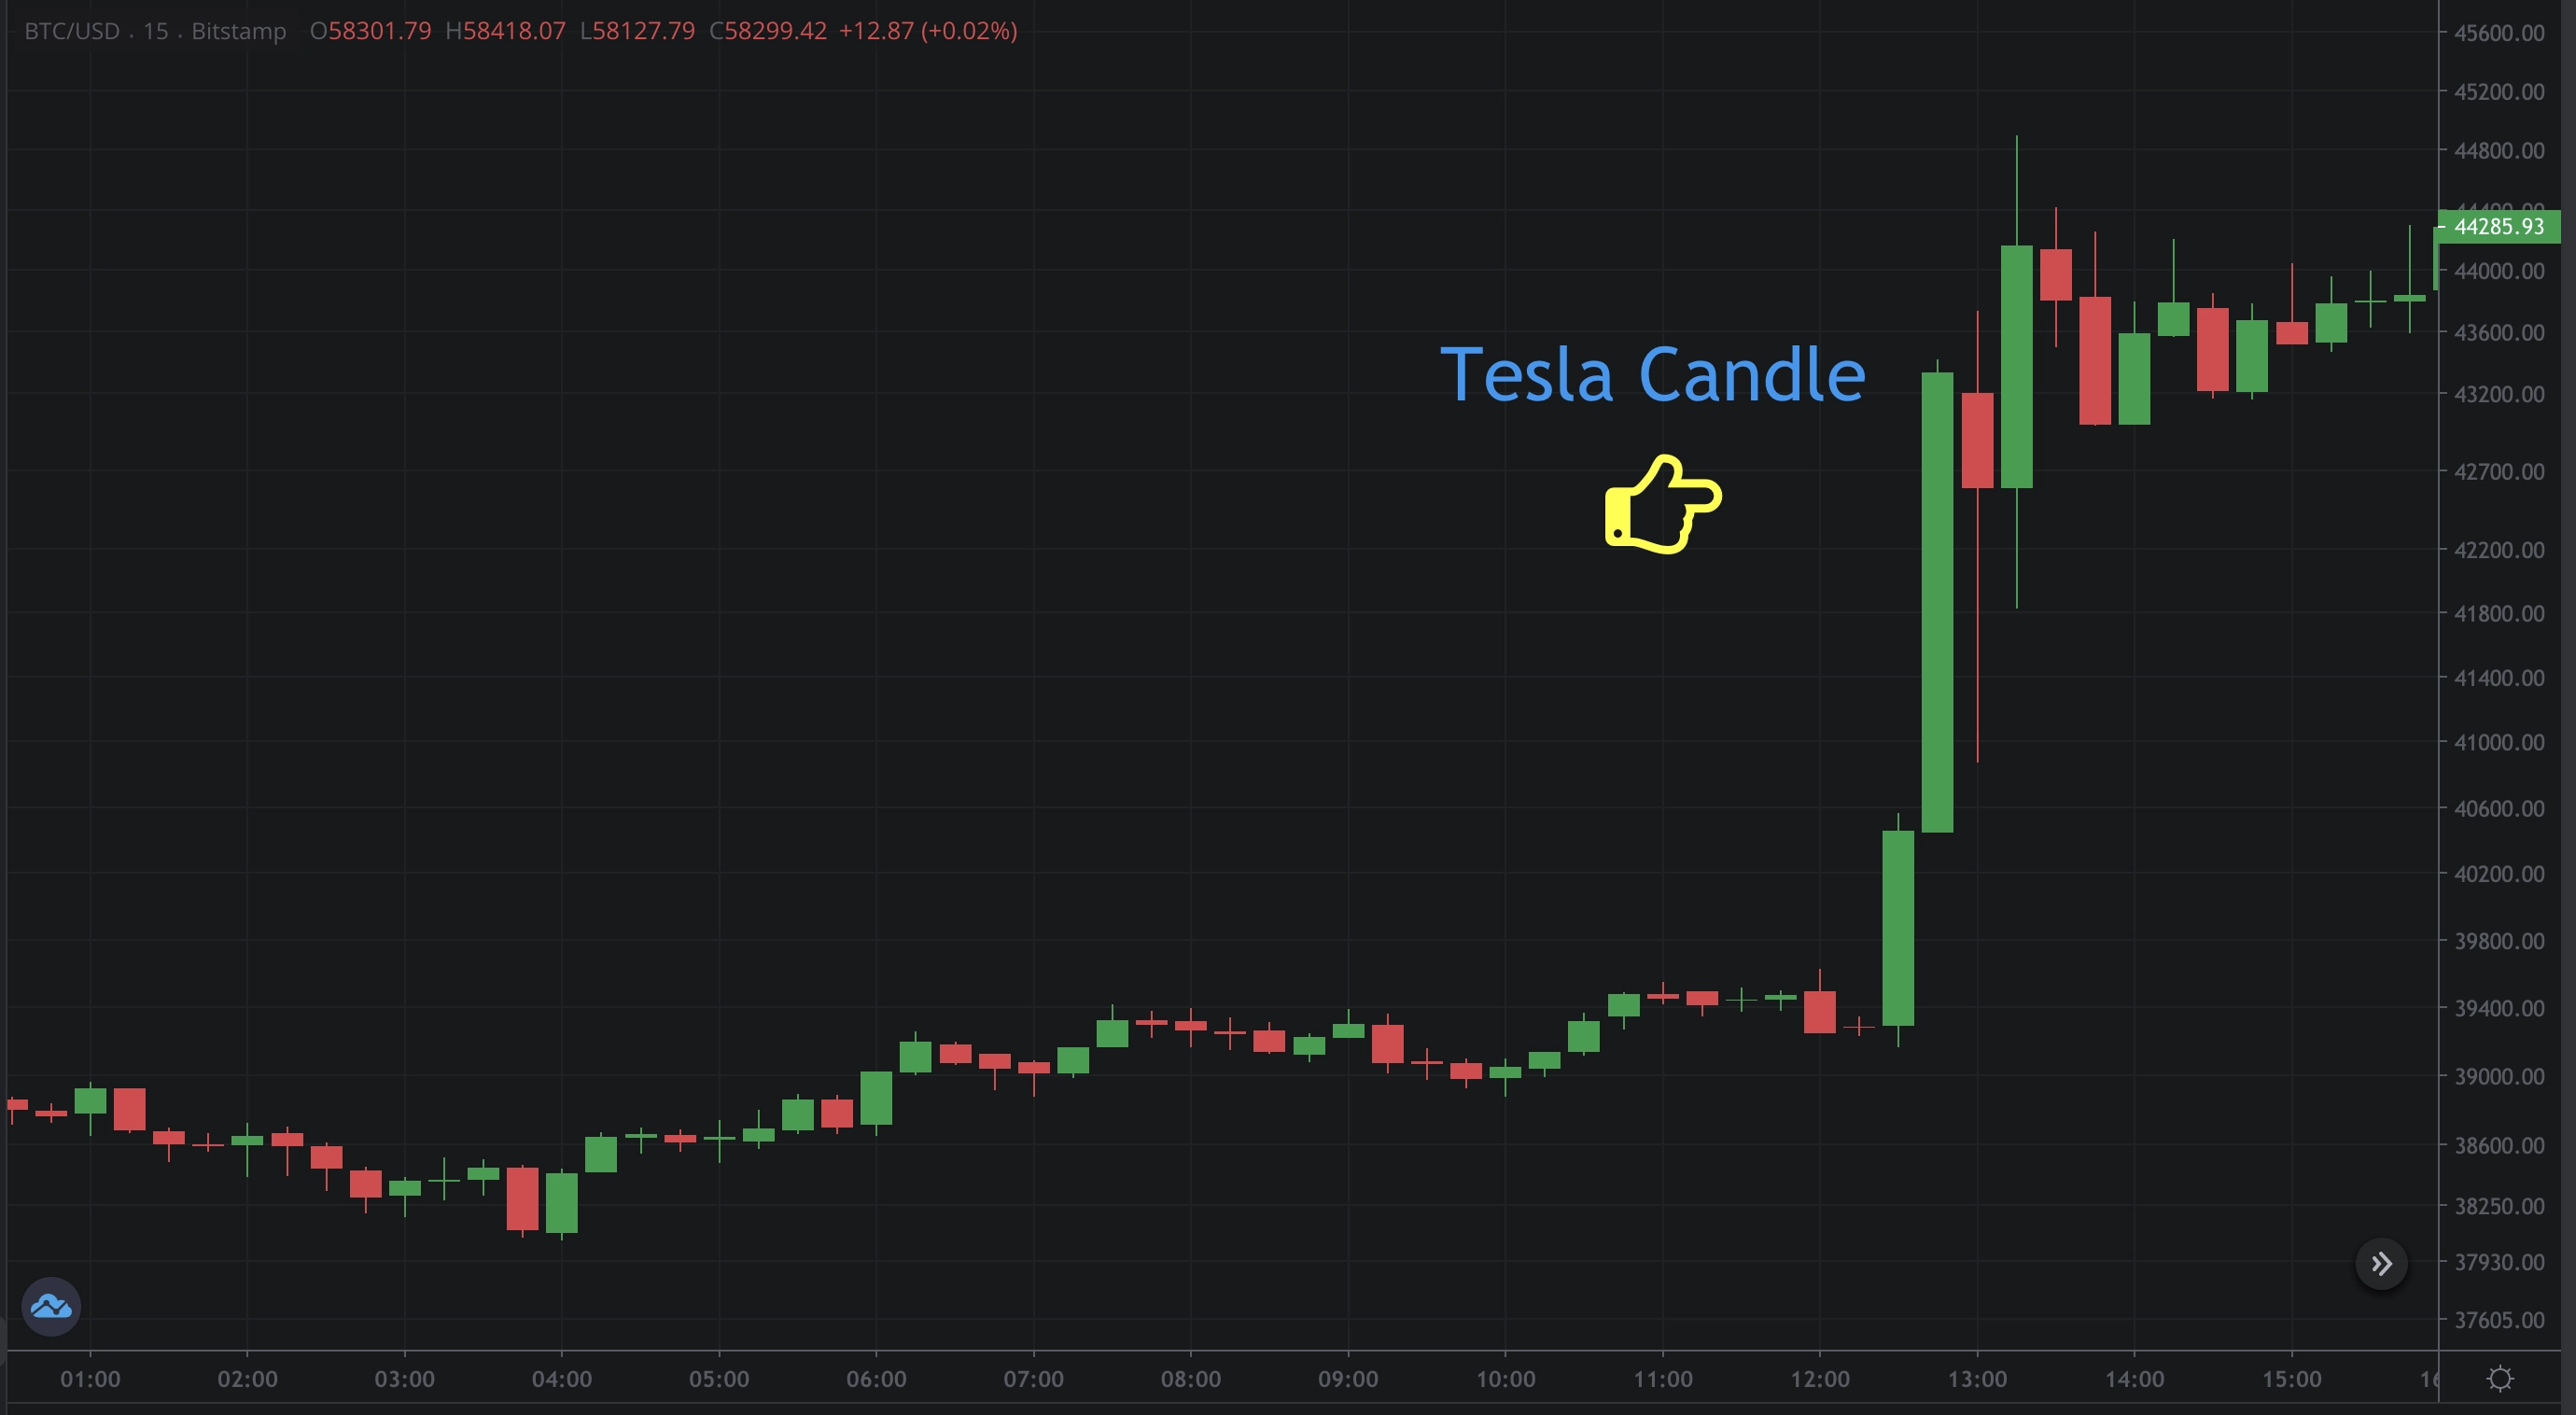 Bitcoin Price Reacts to Tesla News